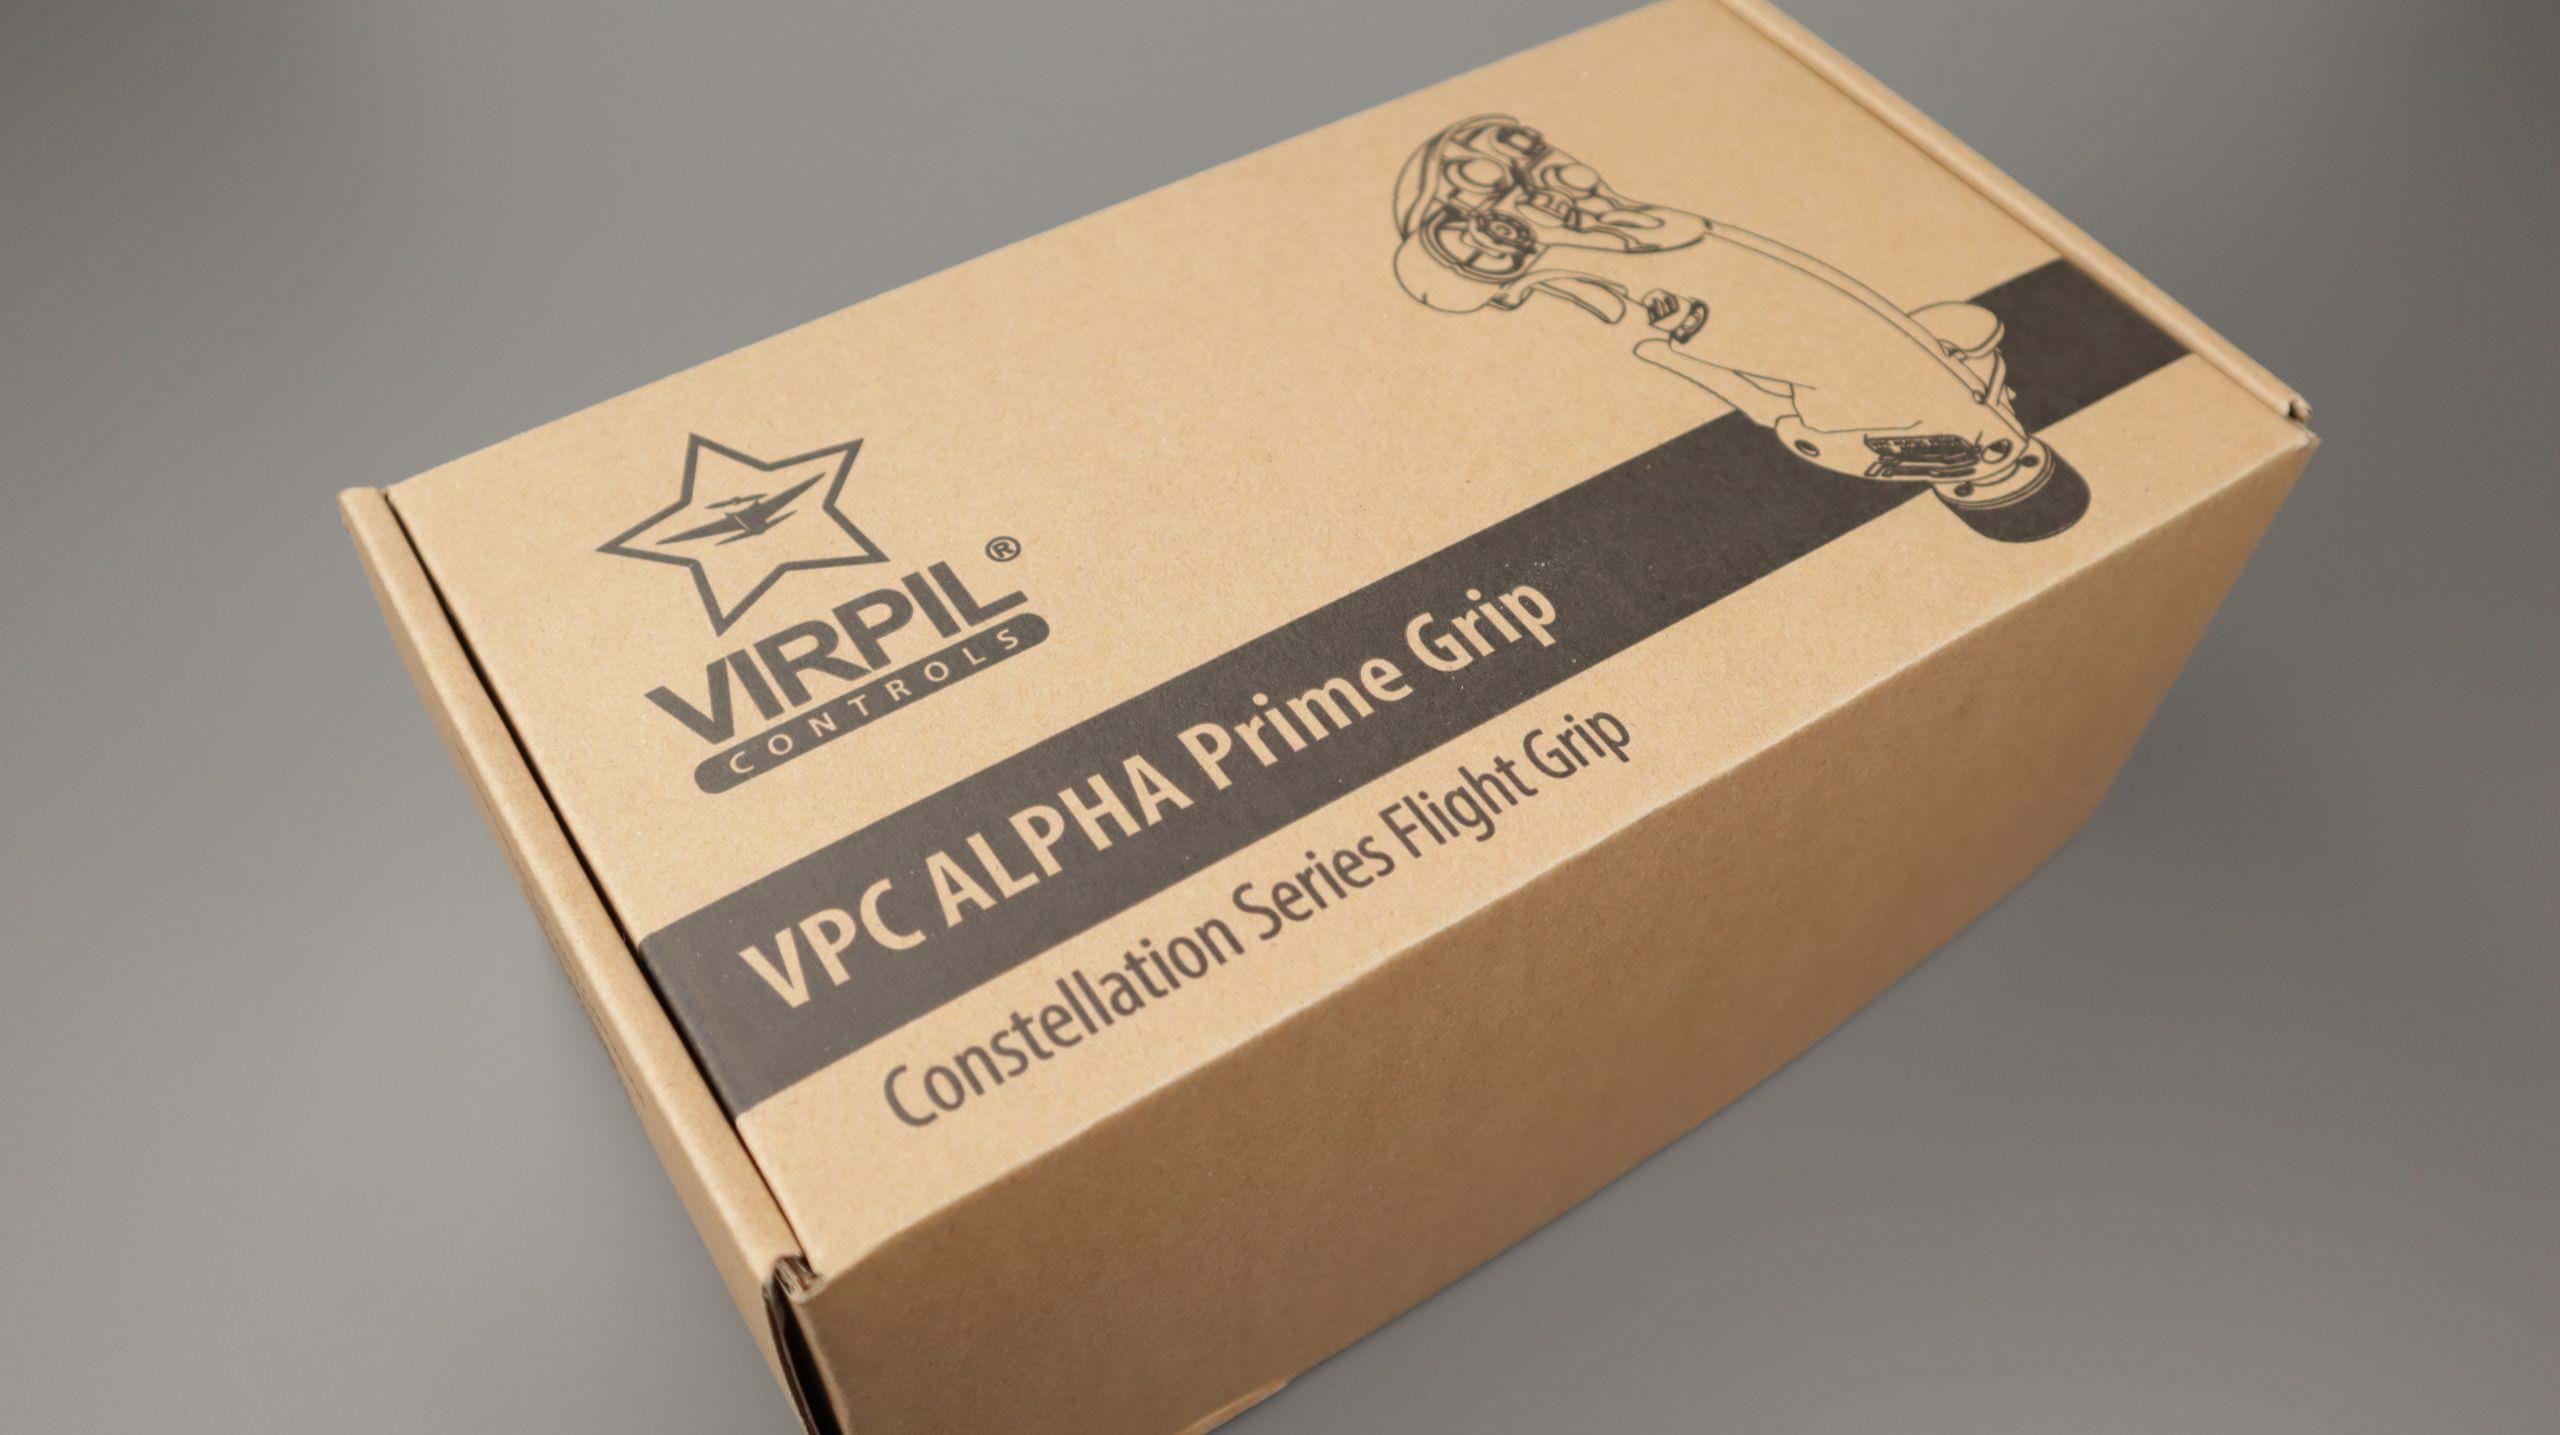 VIRPIL VPC Constellation ALPHA Prime